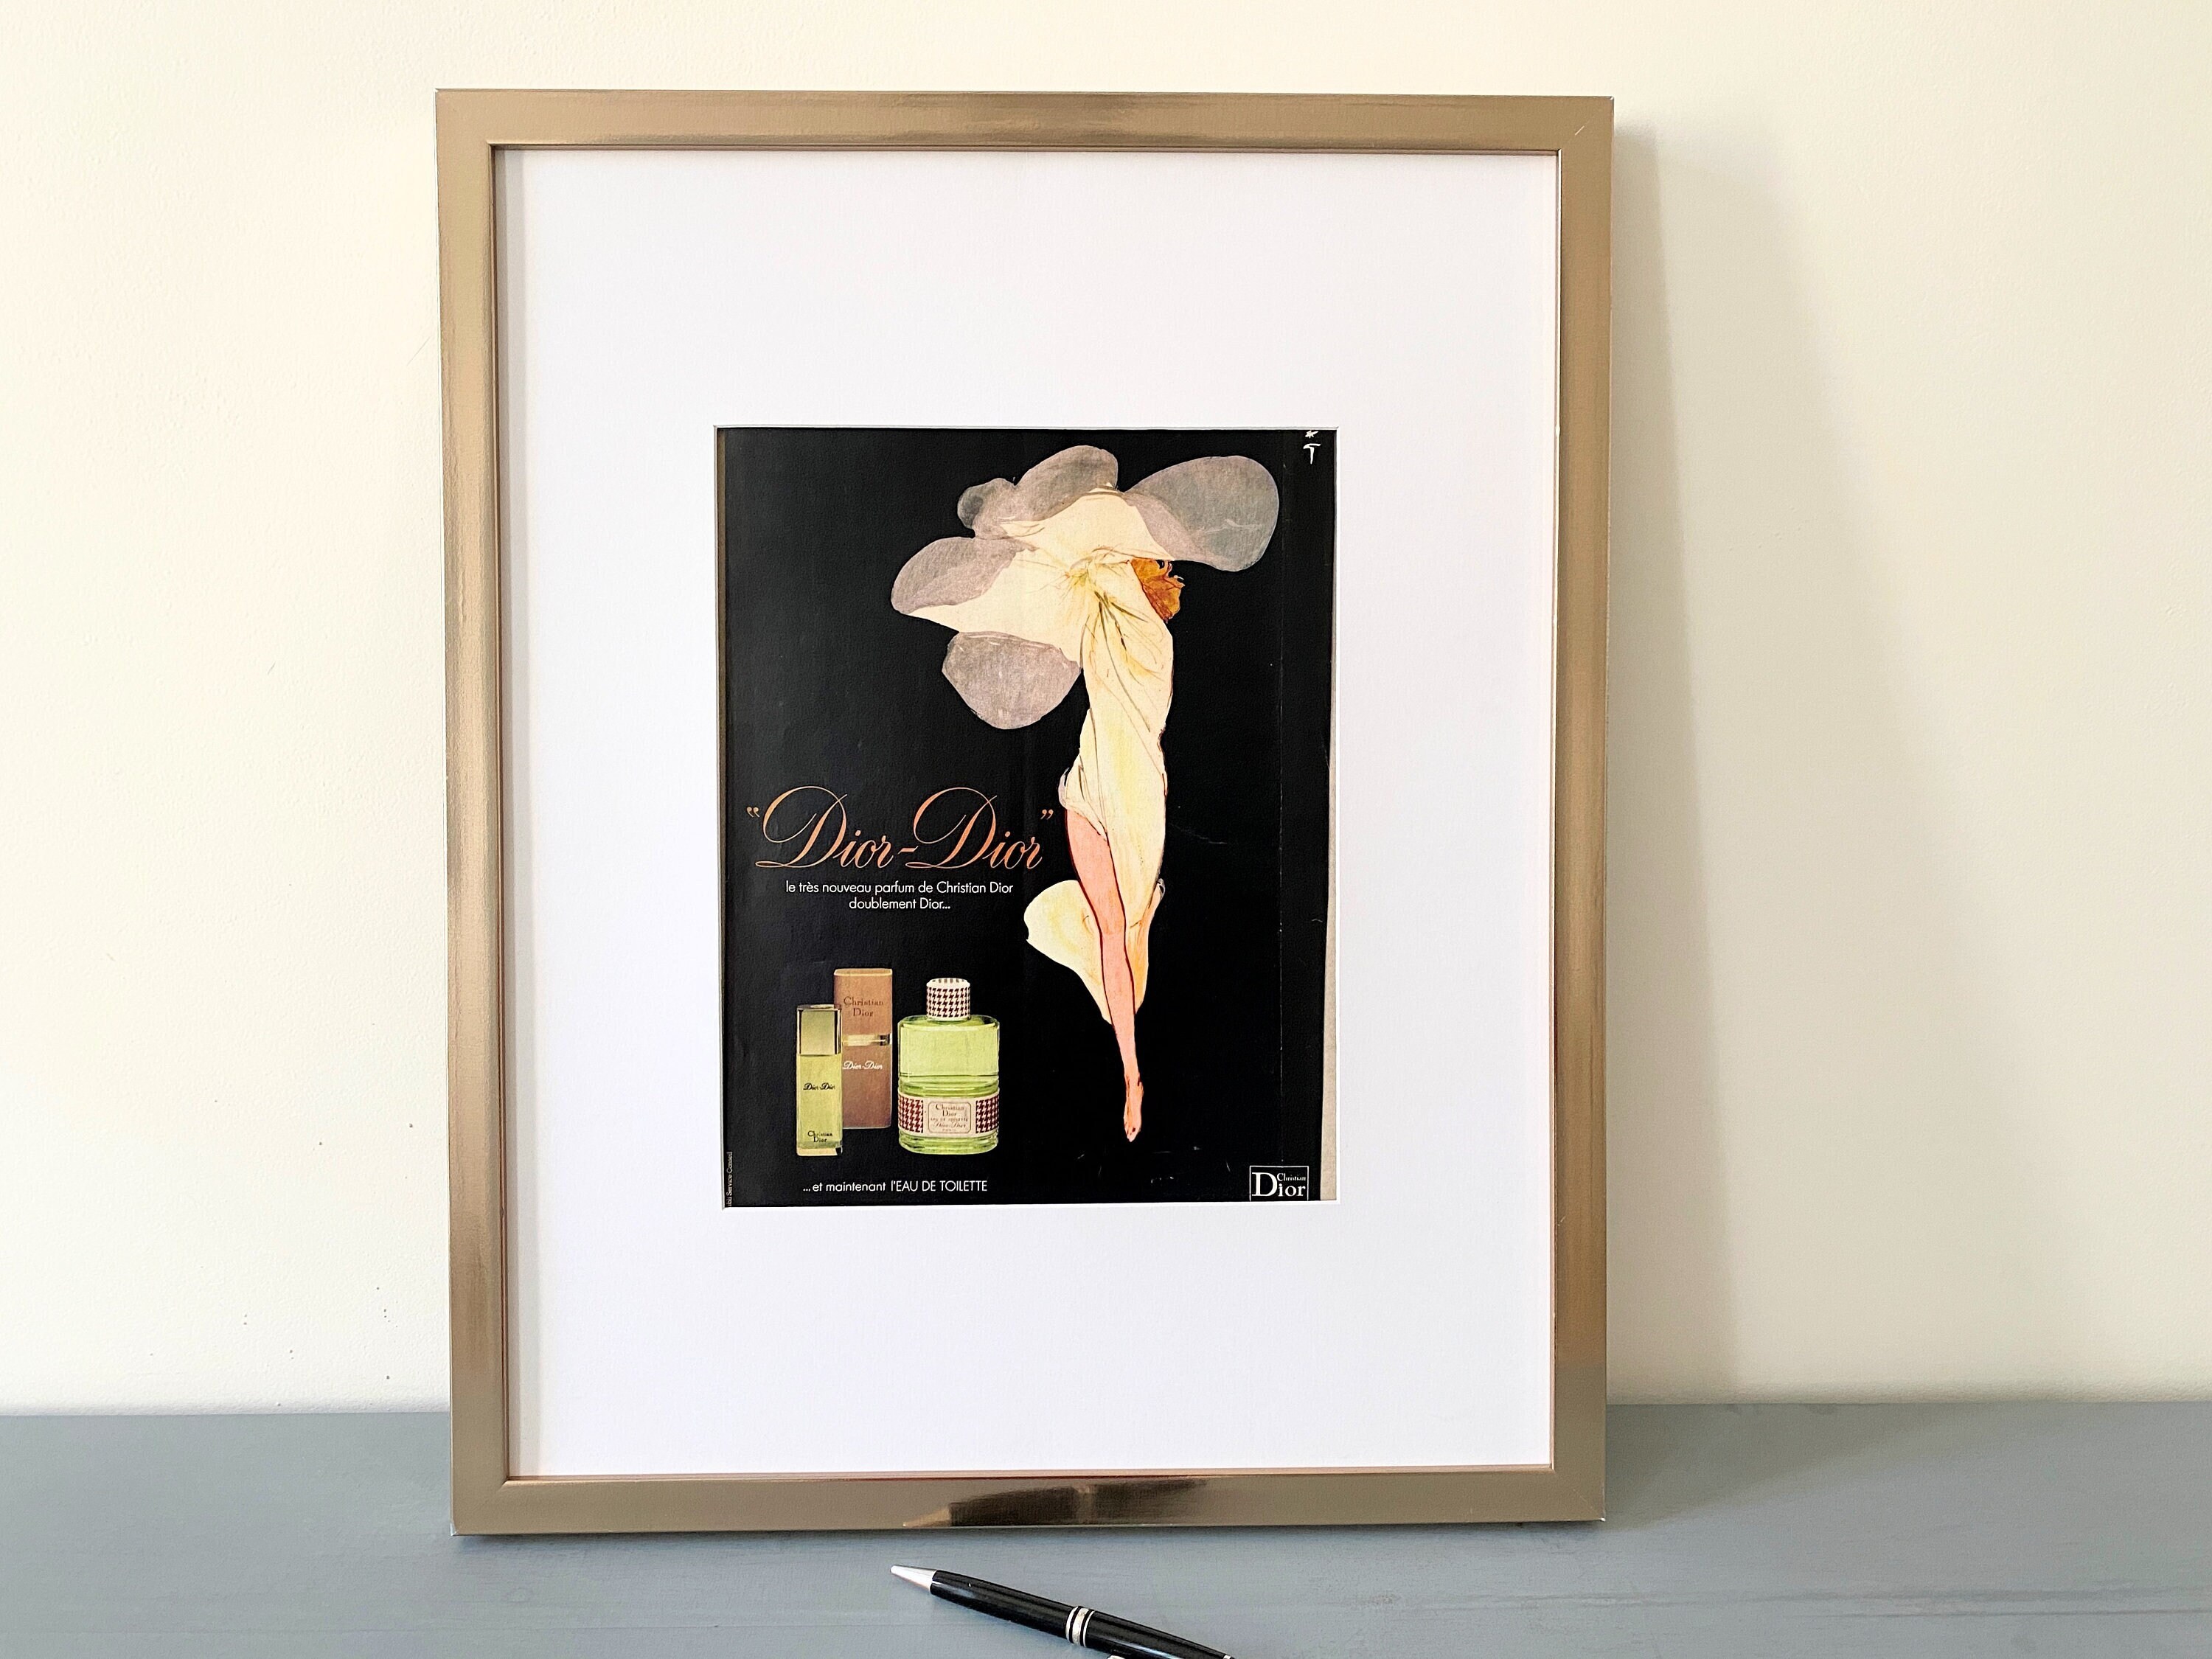 Small poster Dior Parfum Eau sauvage Corto Maltese HUGO PRATT